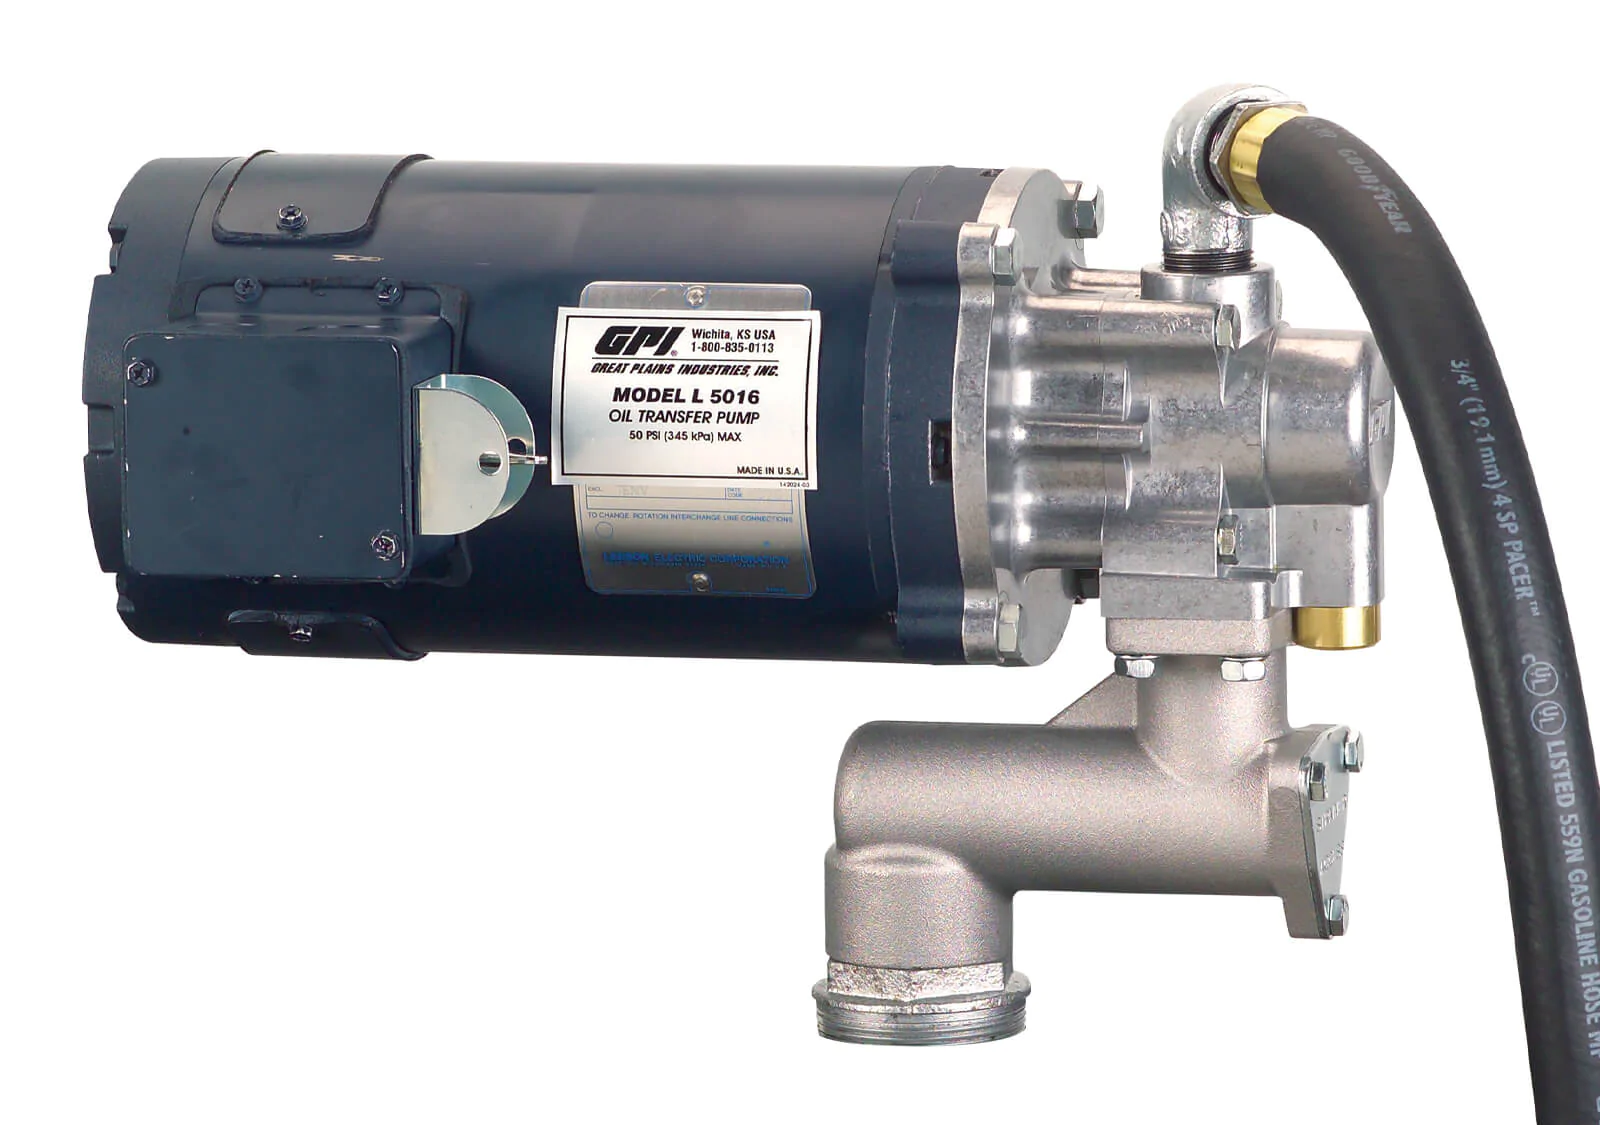 SVI's Waste Oil Transfer Pump 110v